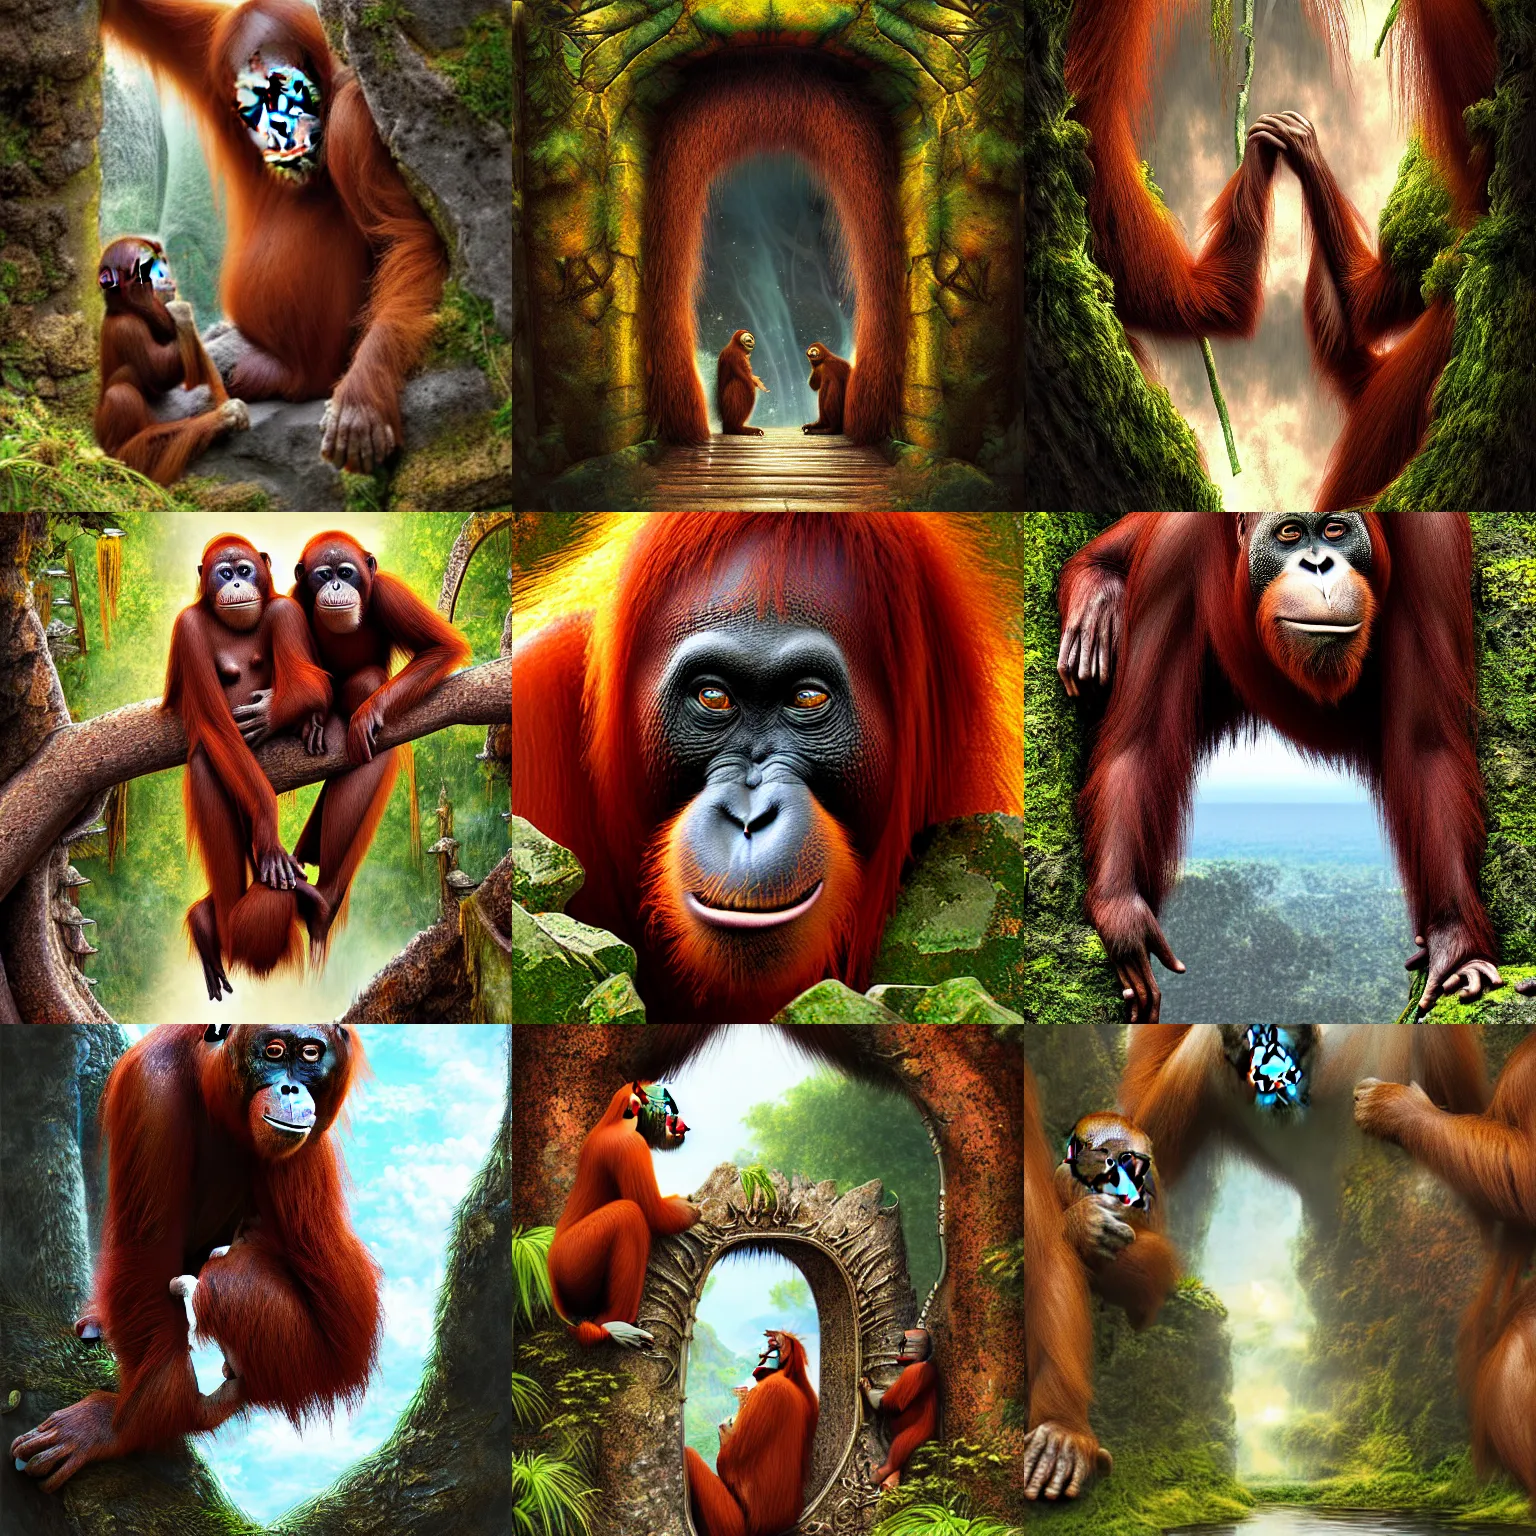 Prompt: The gate to the eternal kingdom of orangutans, fantasy, digital art, HD, detailed.